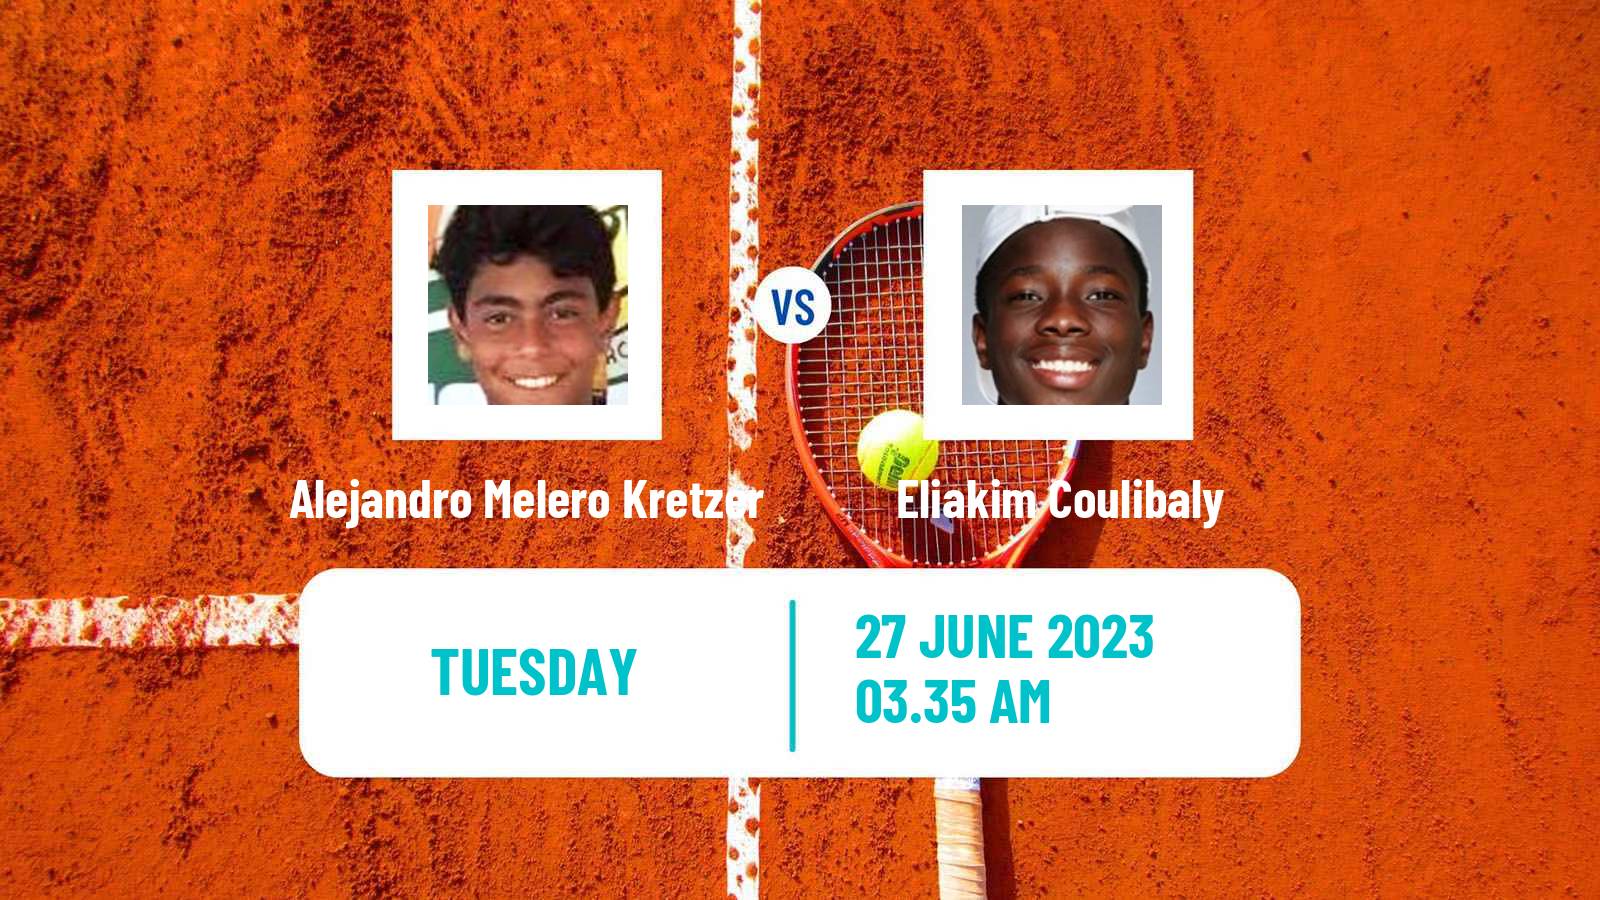 Tennis ITF M25 Bakio Men Alejandro Melero Kretzer - Eliakim Coulibaly